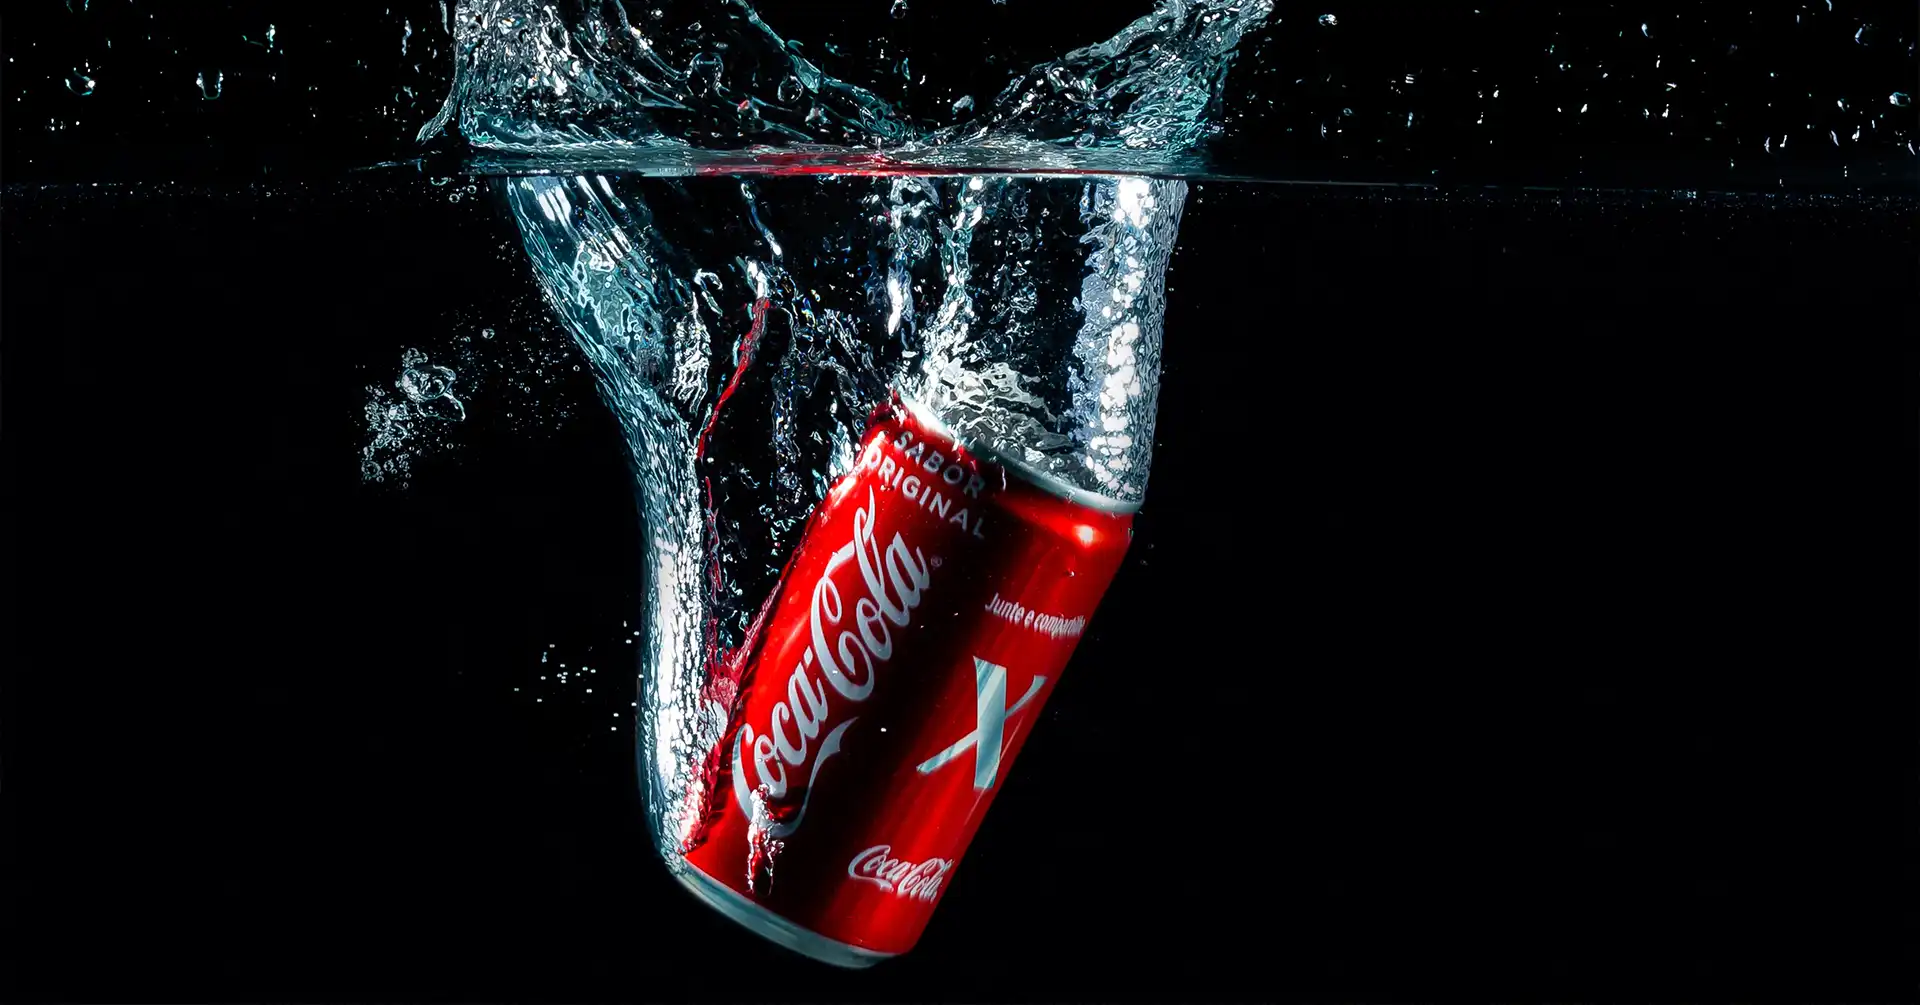 world of coca-cola